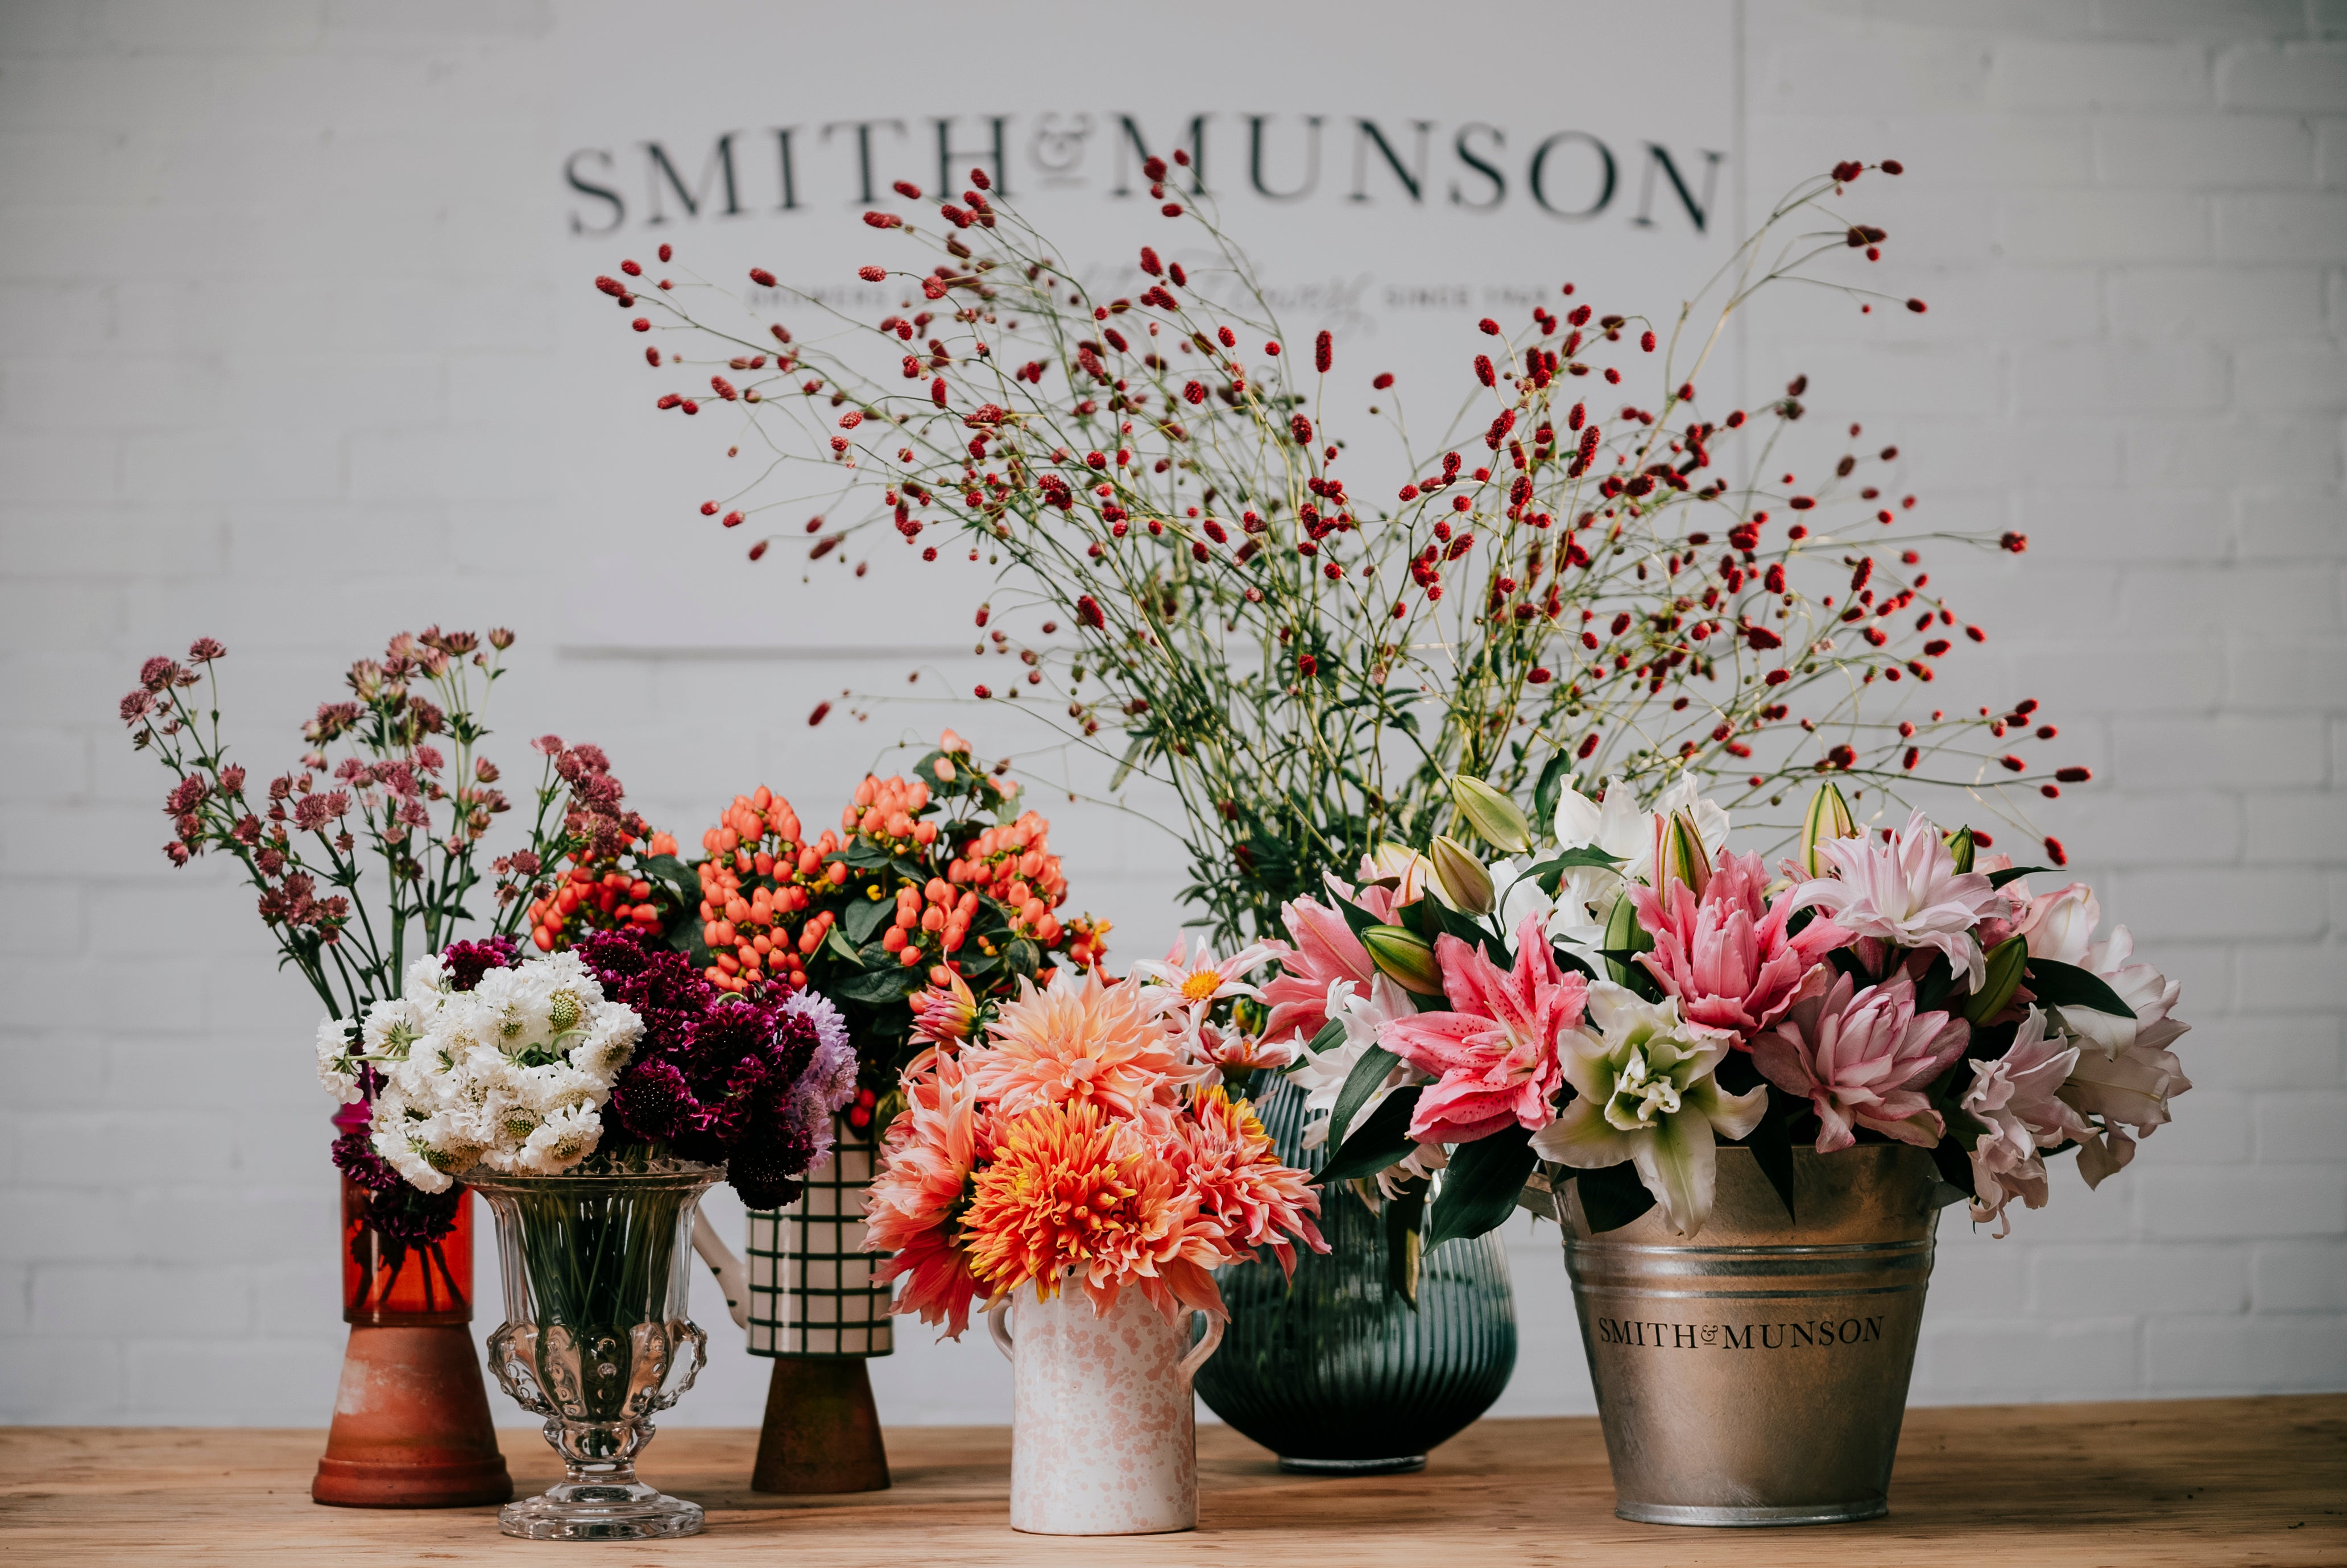 Smith & Munson Flower Subscription